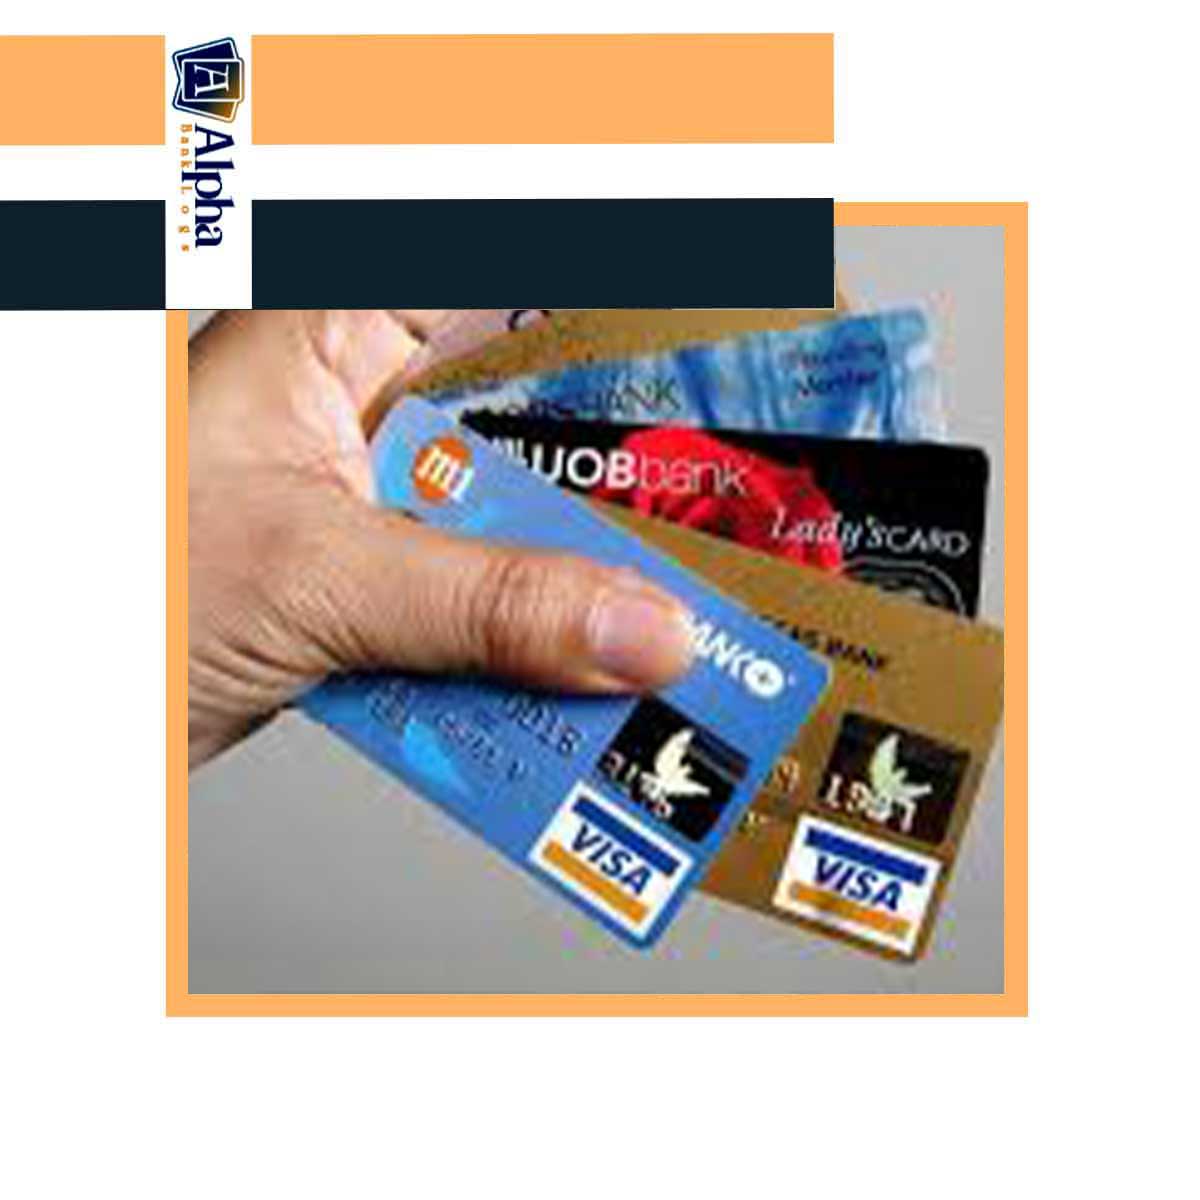 hack your credit or debit cards